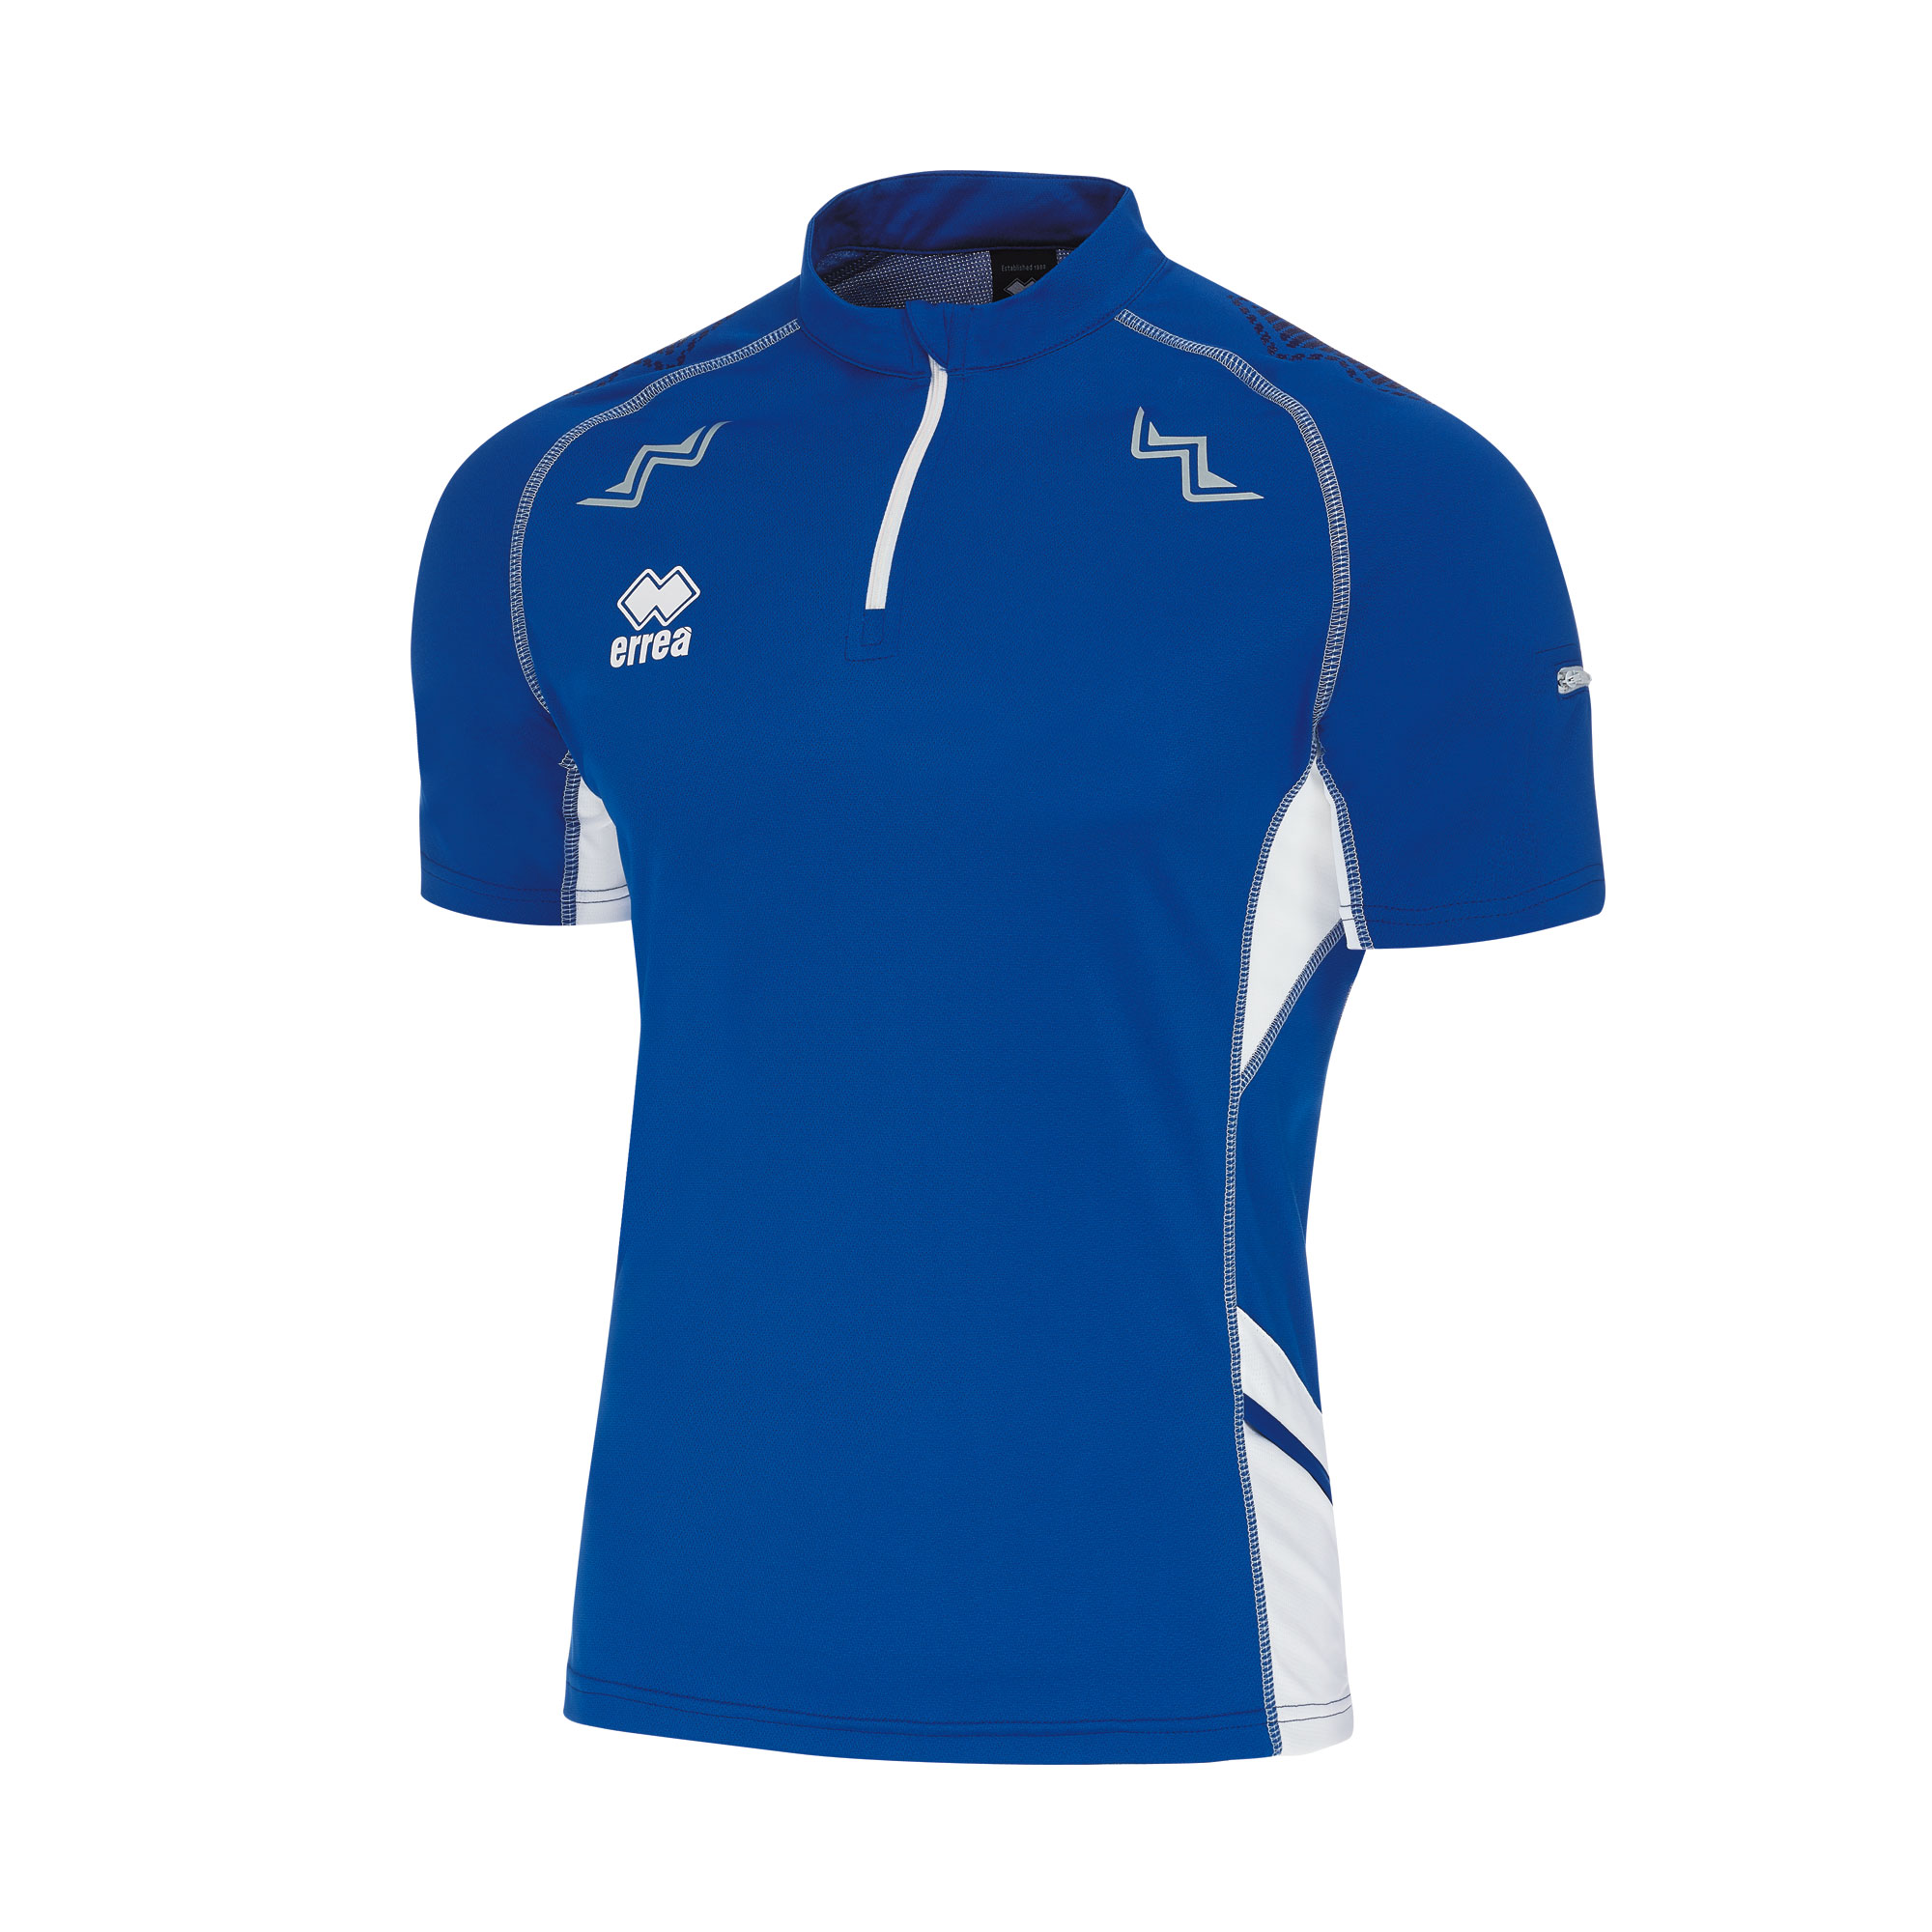 ERREA pánské běžecké triko ELDORADO BARVA: modrá - bílá, Velikost: M